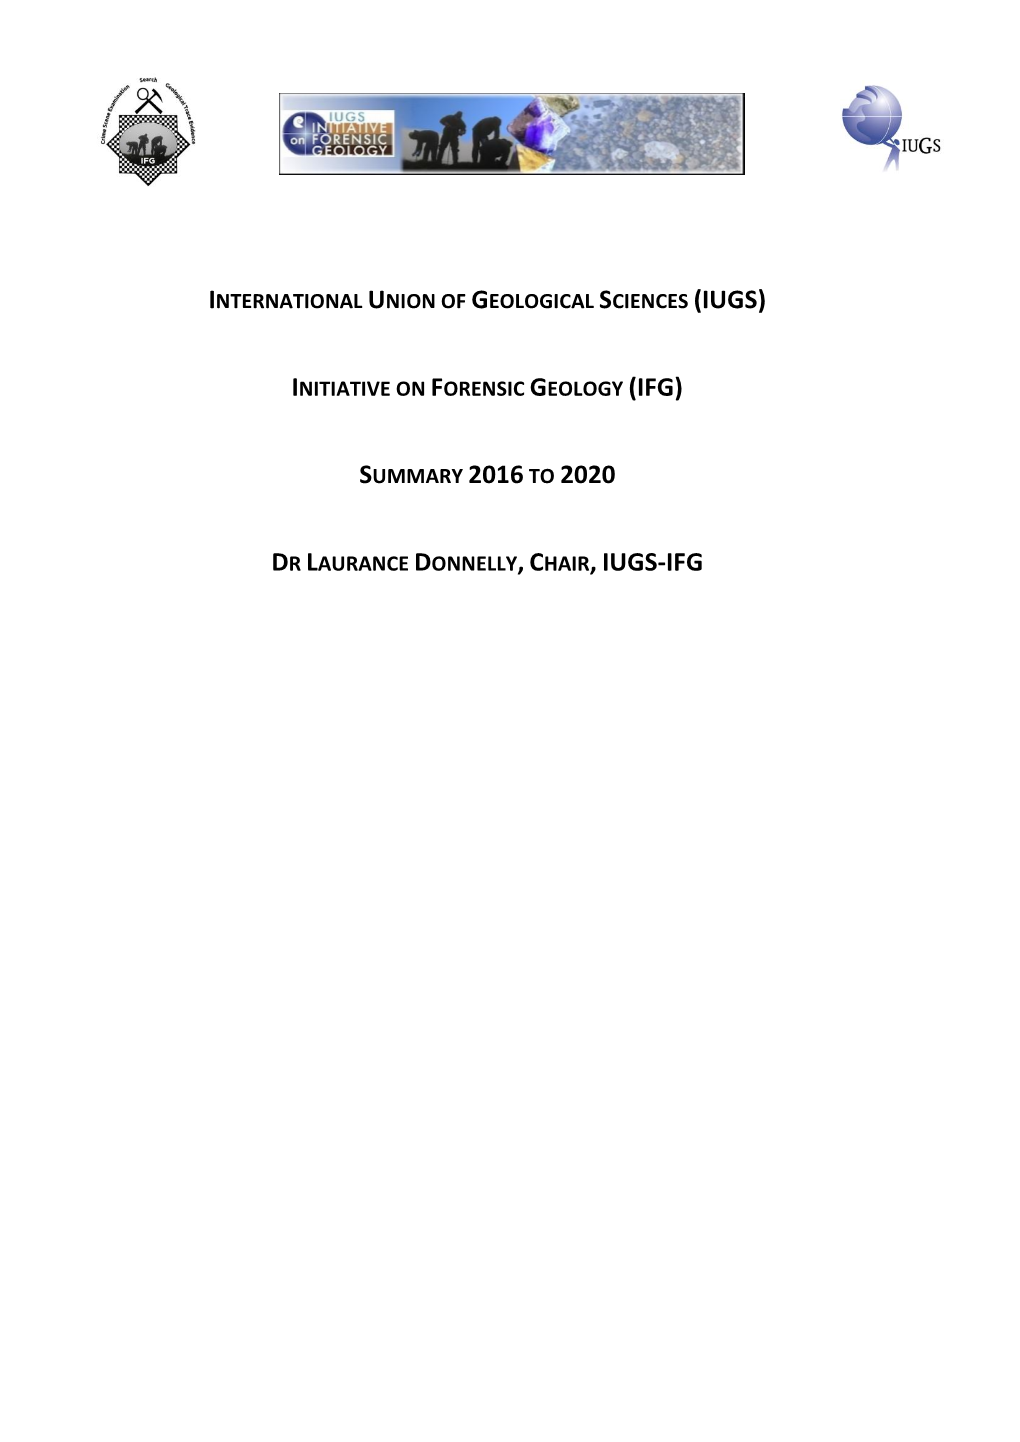 IUGS IFG Summary 2016 to 2020